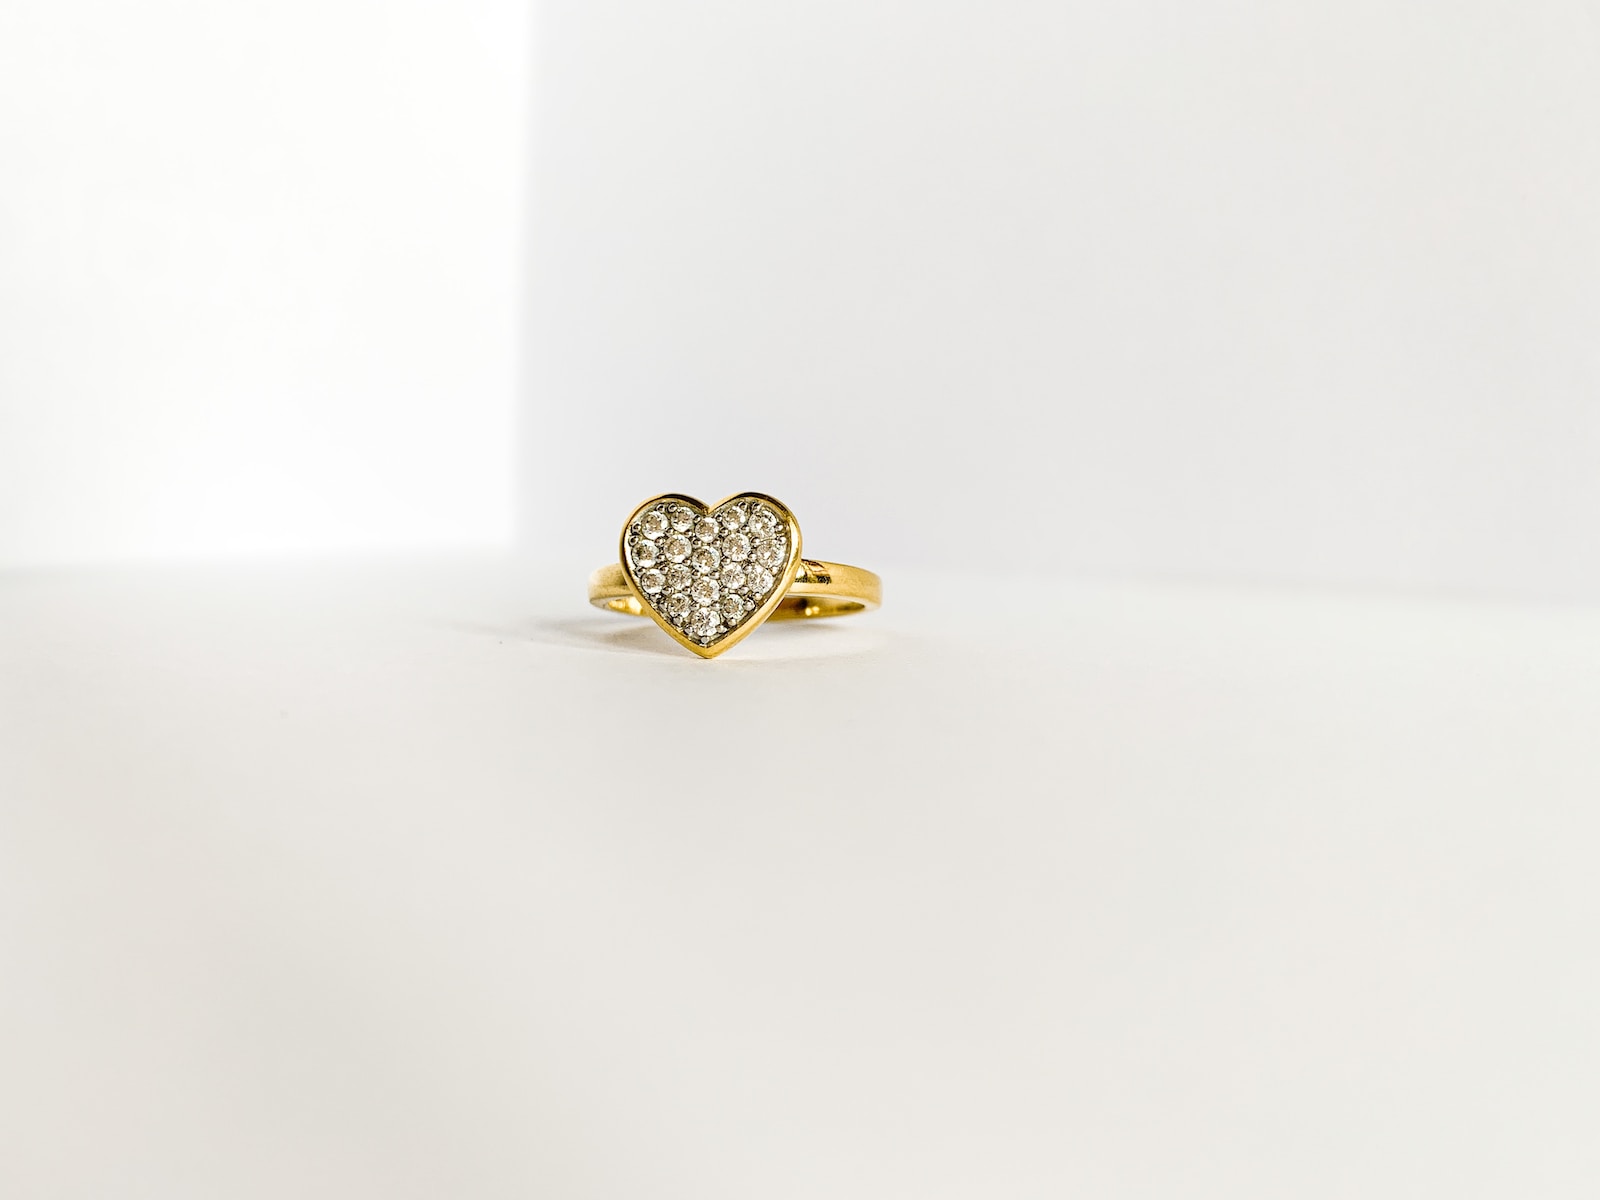 gold diamond ring on white surface